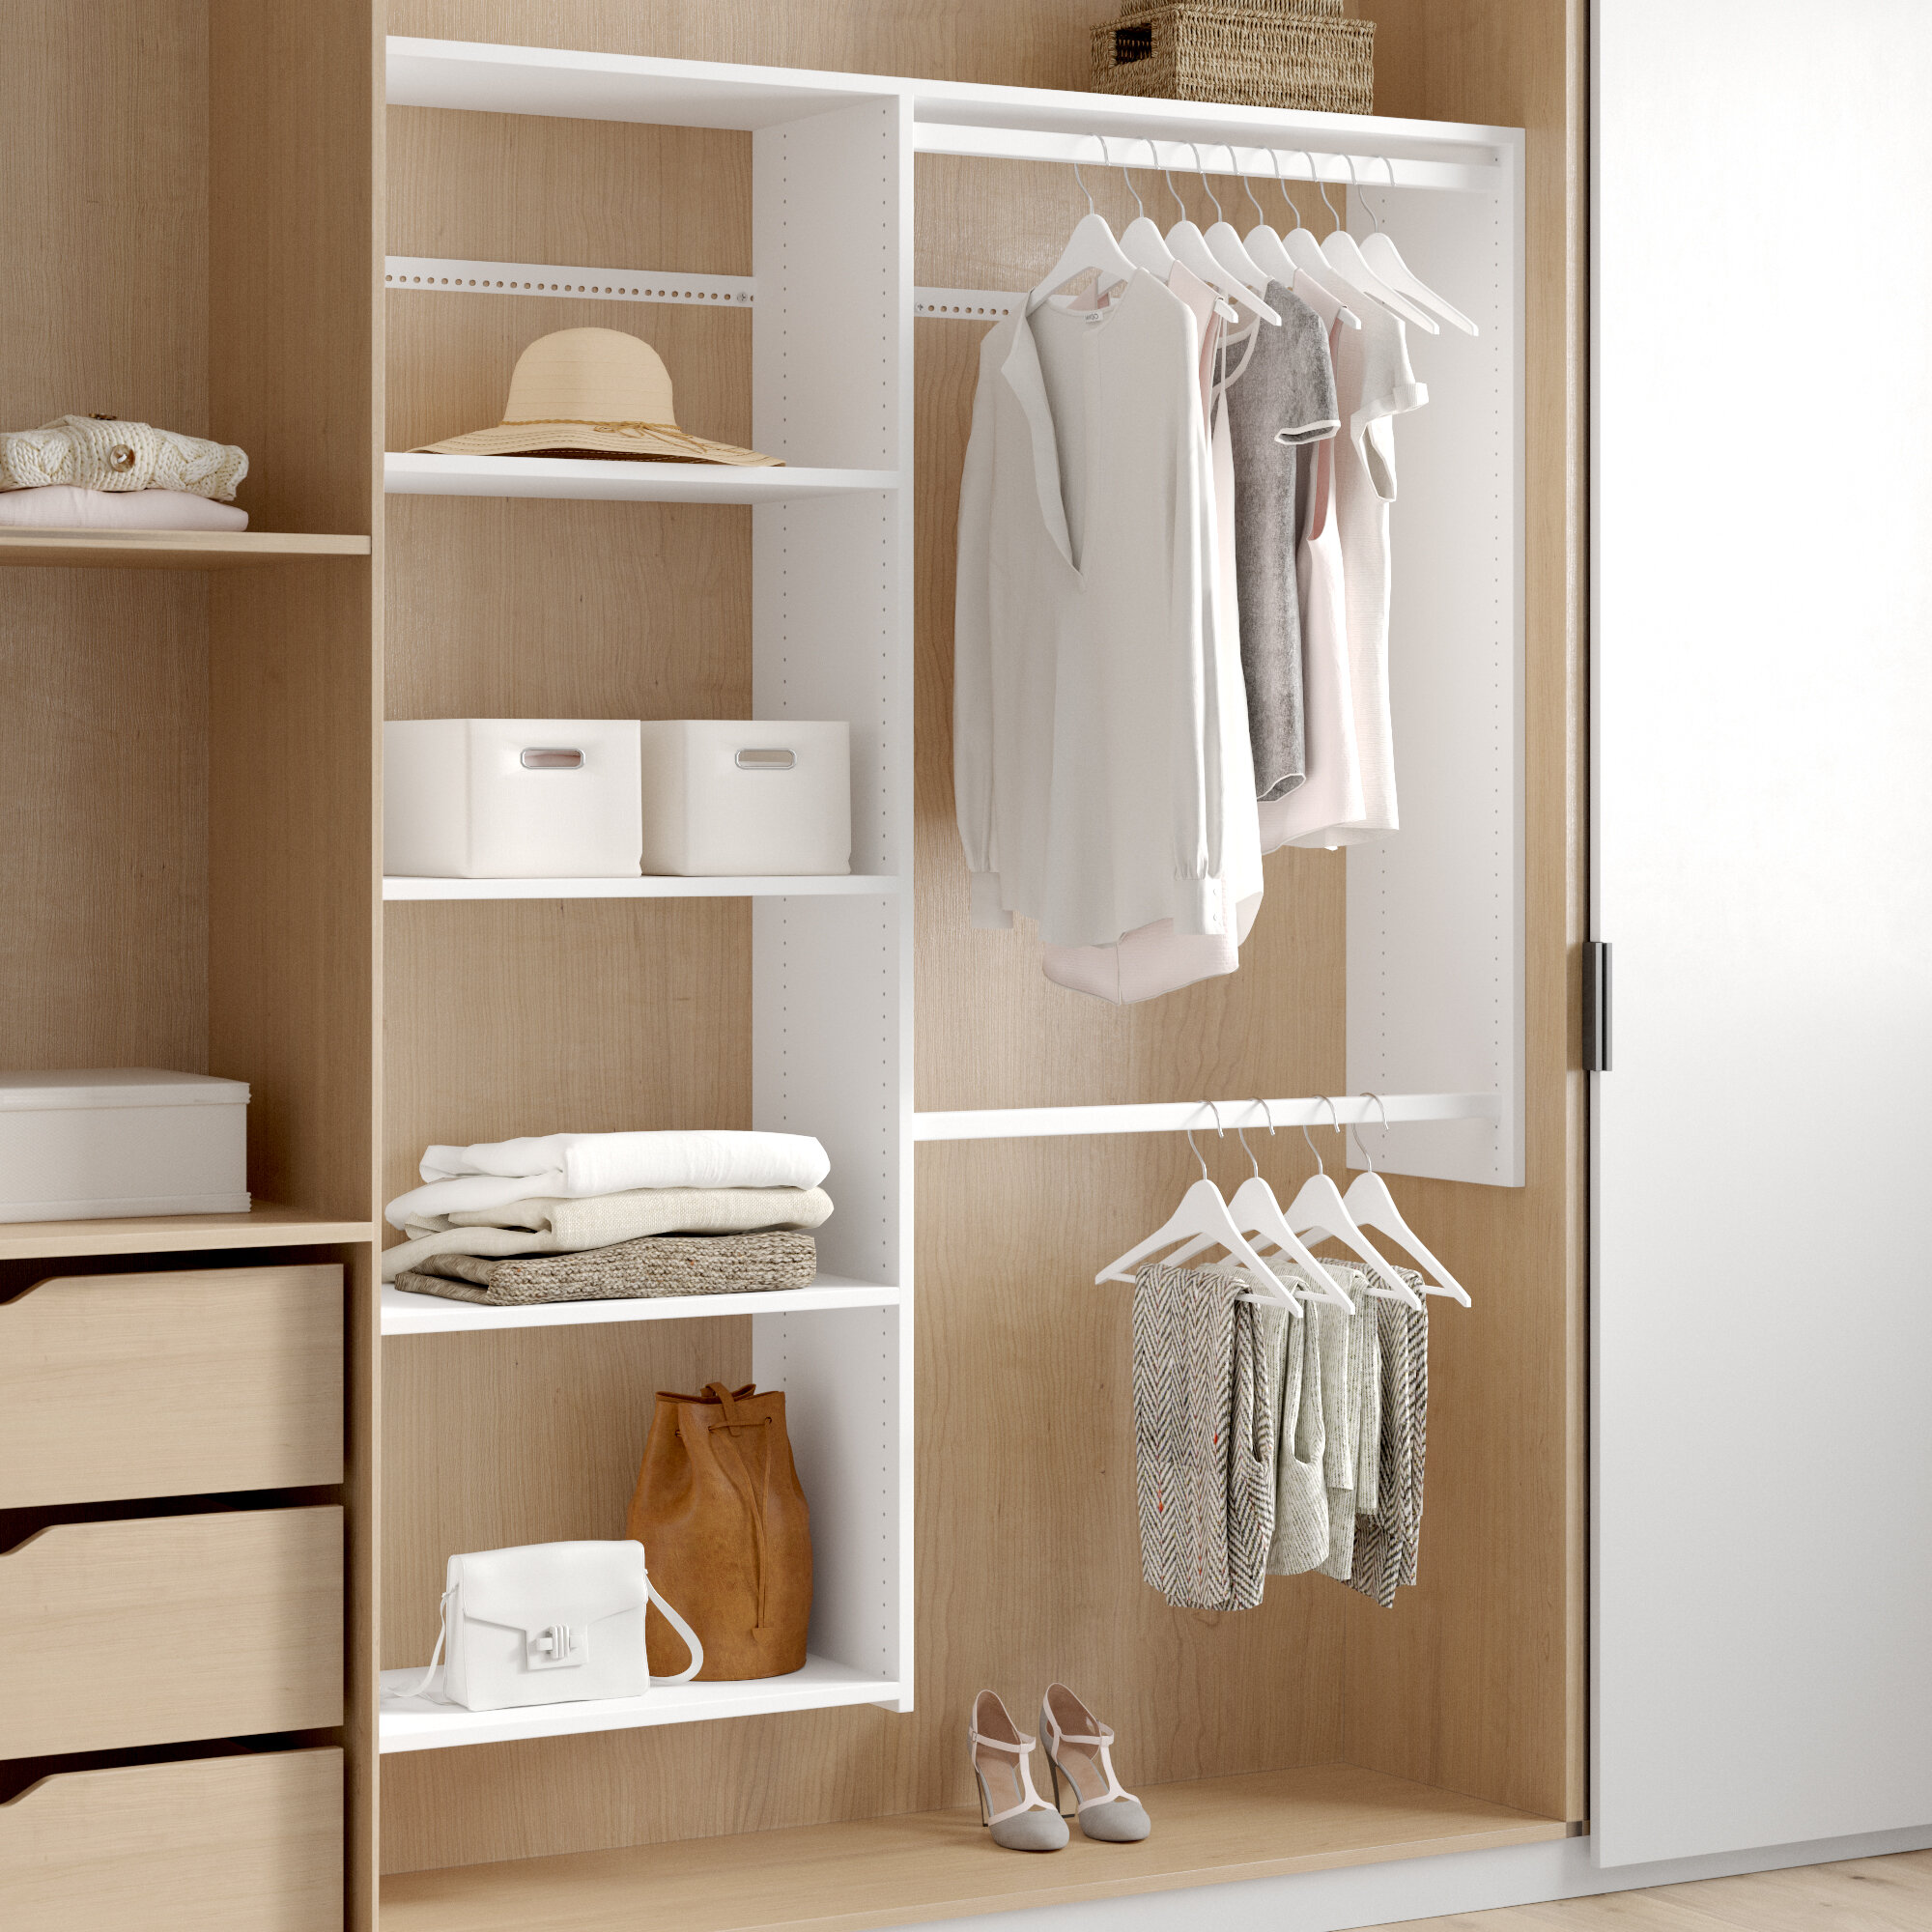 Rubbermaid Pantry 36 inch Closet Storage Organization System Kit, White